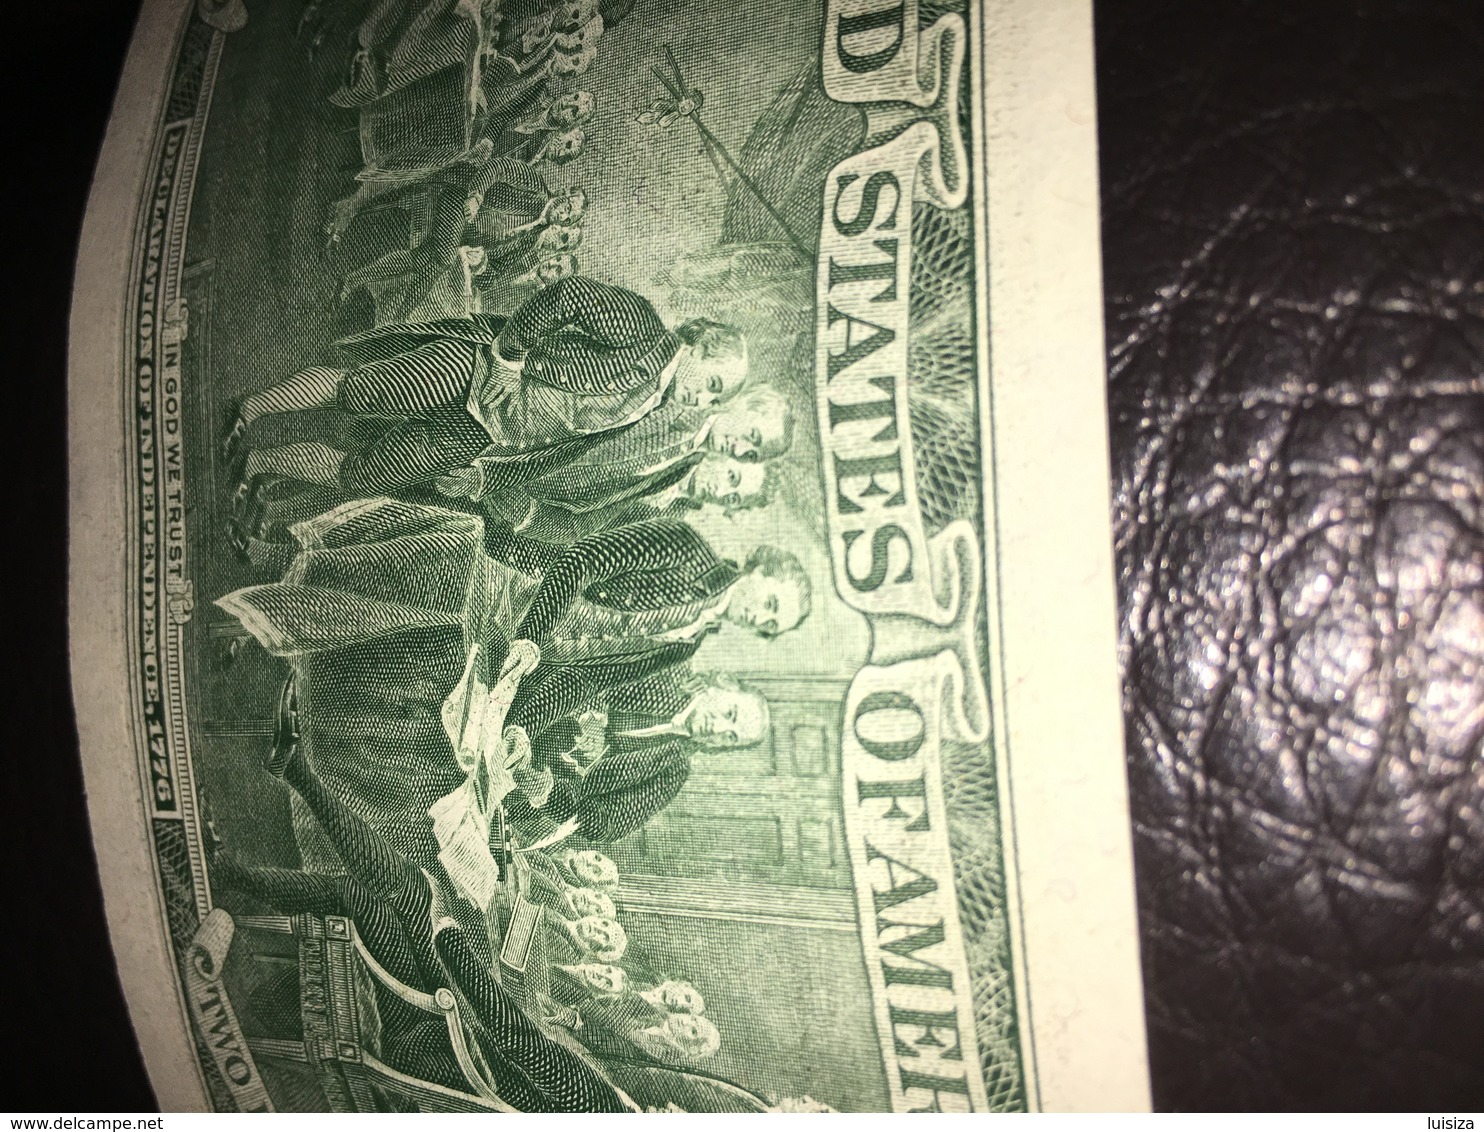 See Photos. U.S.A. - 2 DOLLARS (SERIES 1976) Banknote